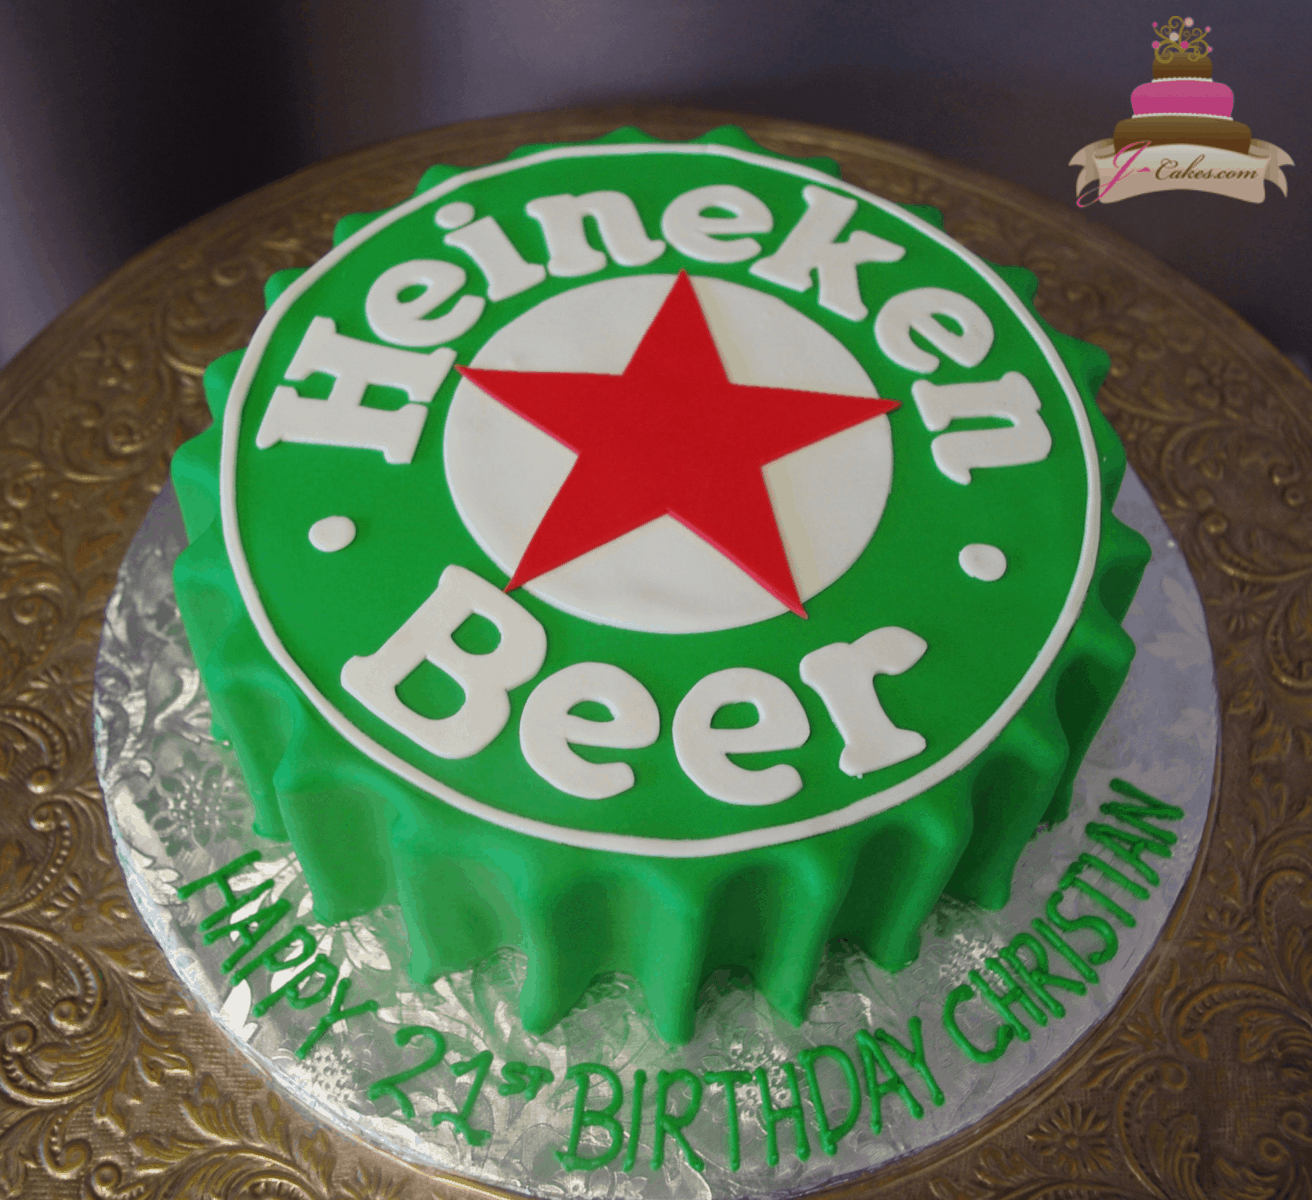 (190) Heineken Bottle Cap Cake